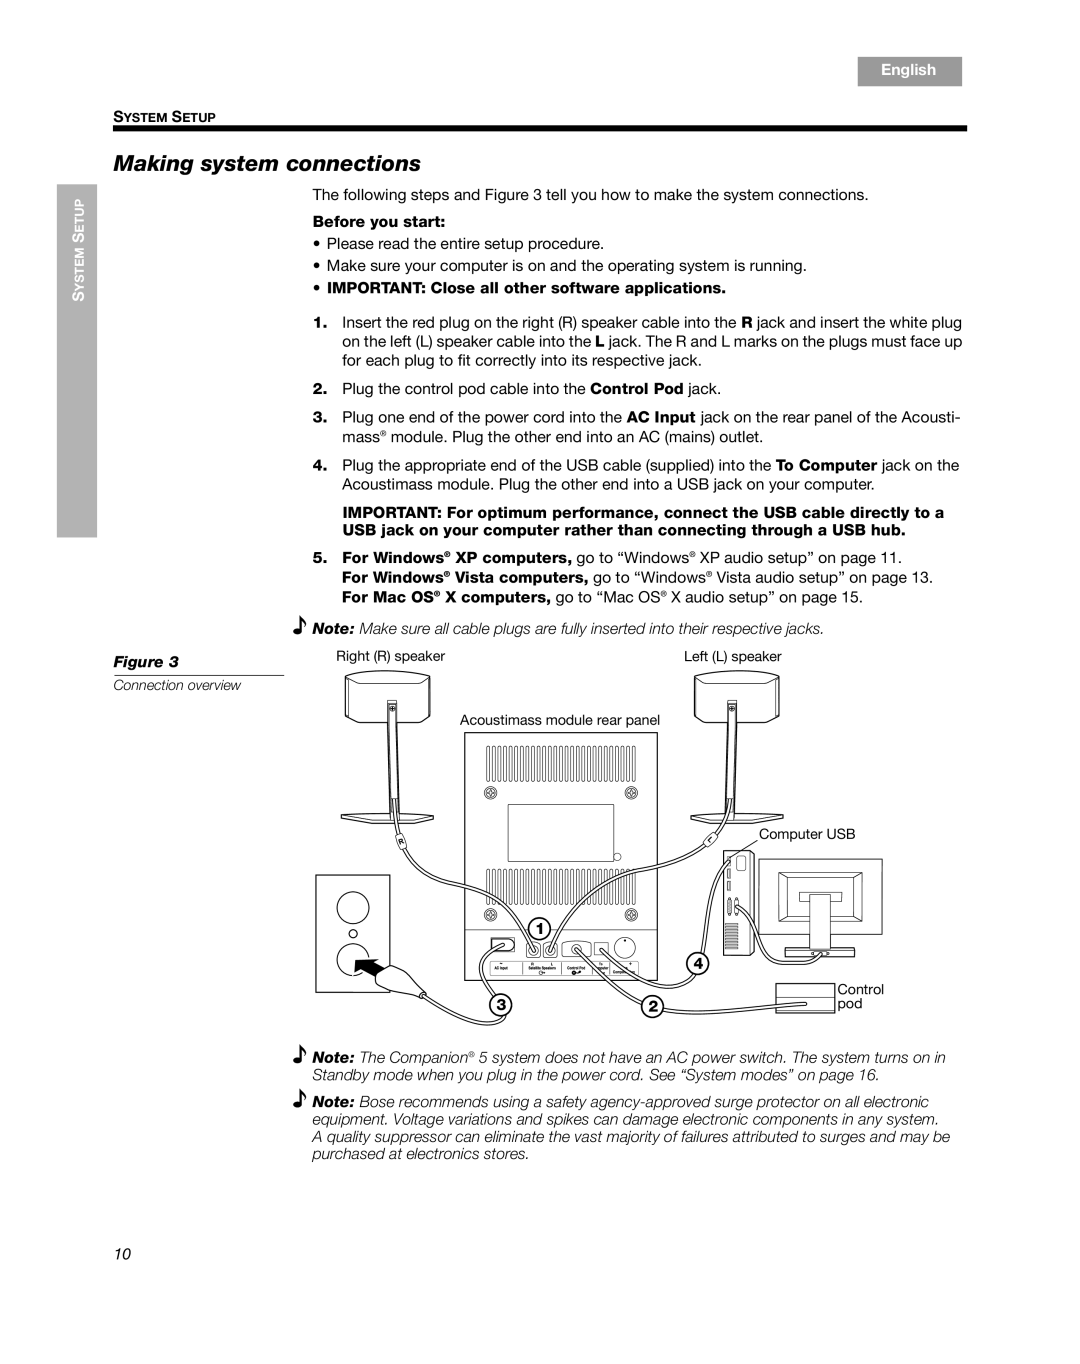 Bose Companion 5 manual Making system connections, Français, Español, English 